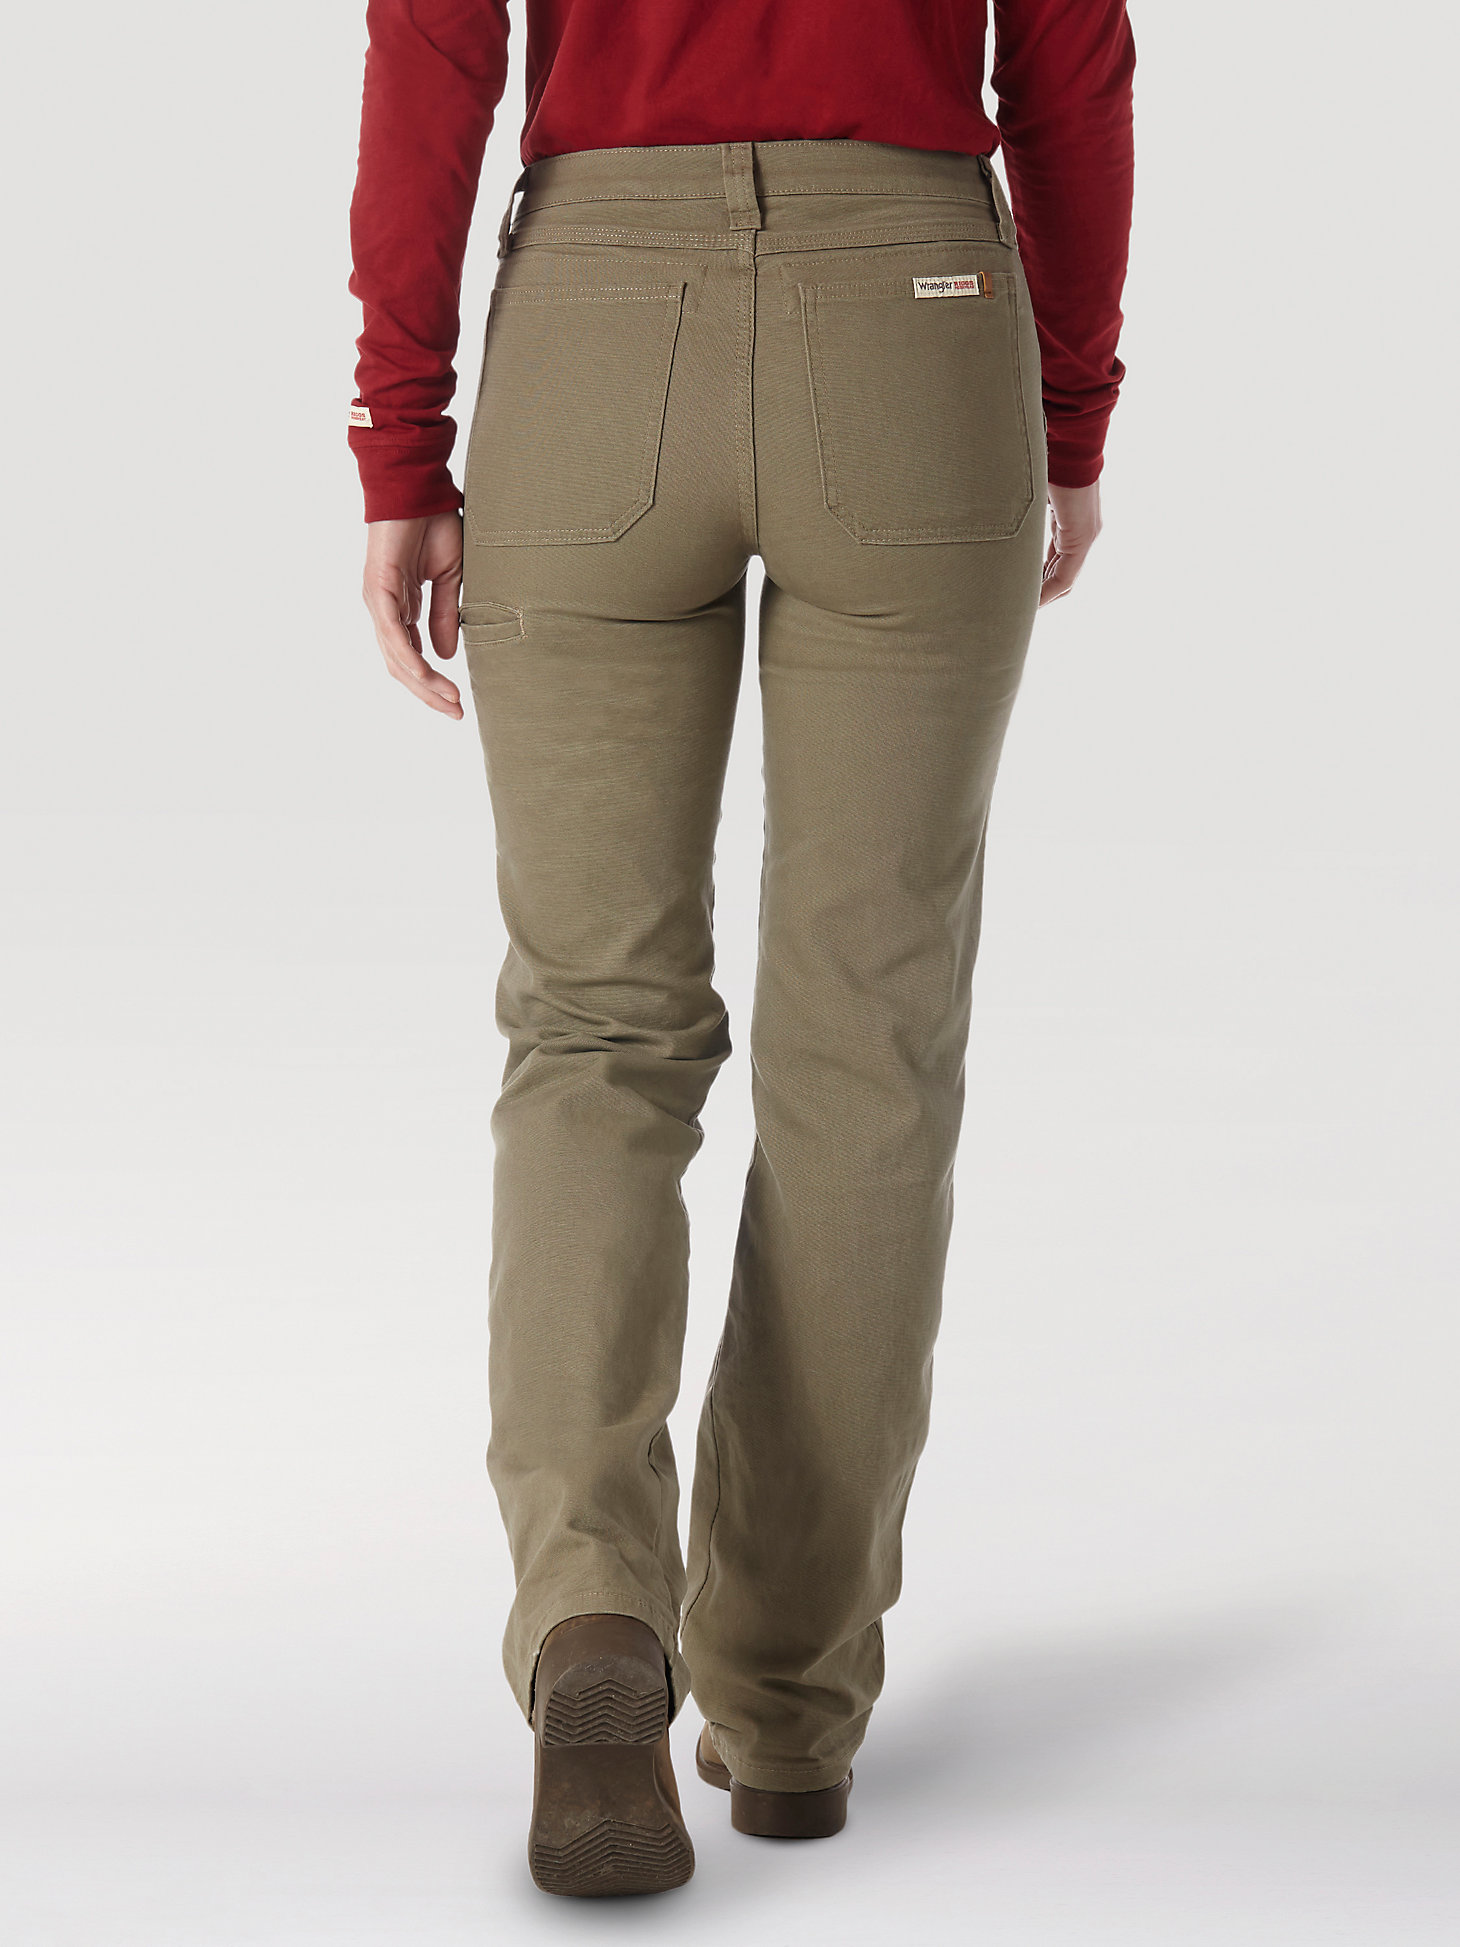 Women's Wrangler® RIGGS Workwear® Advanced Comfort Work Pant in Bark alternative view 2